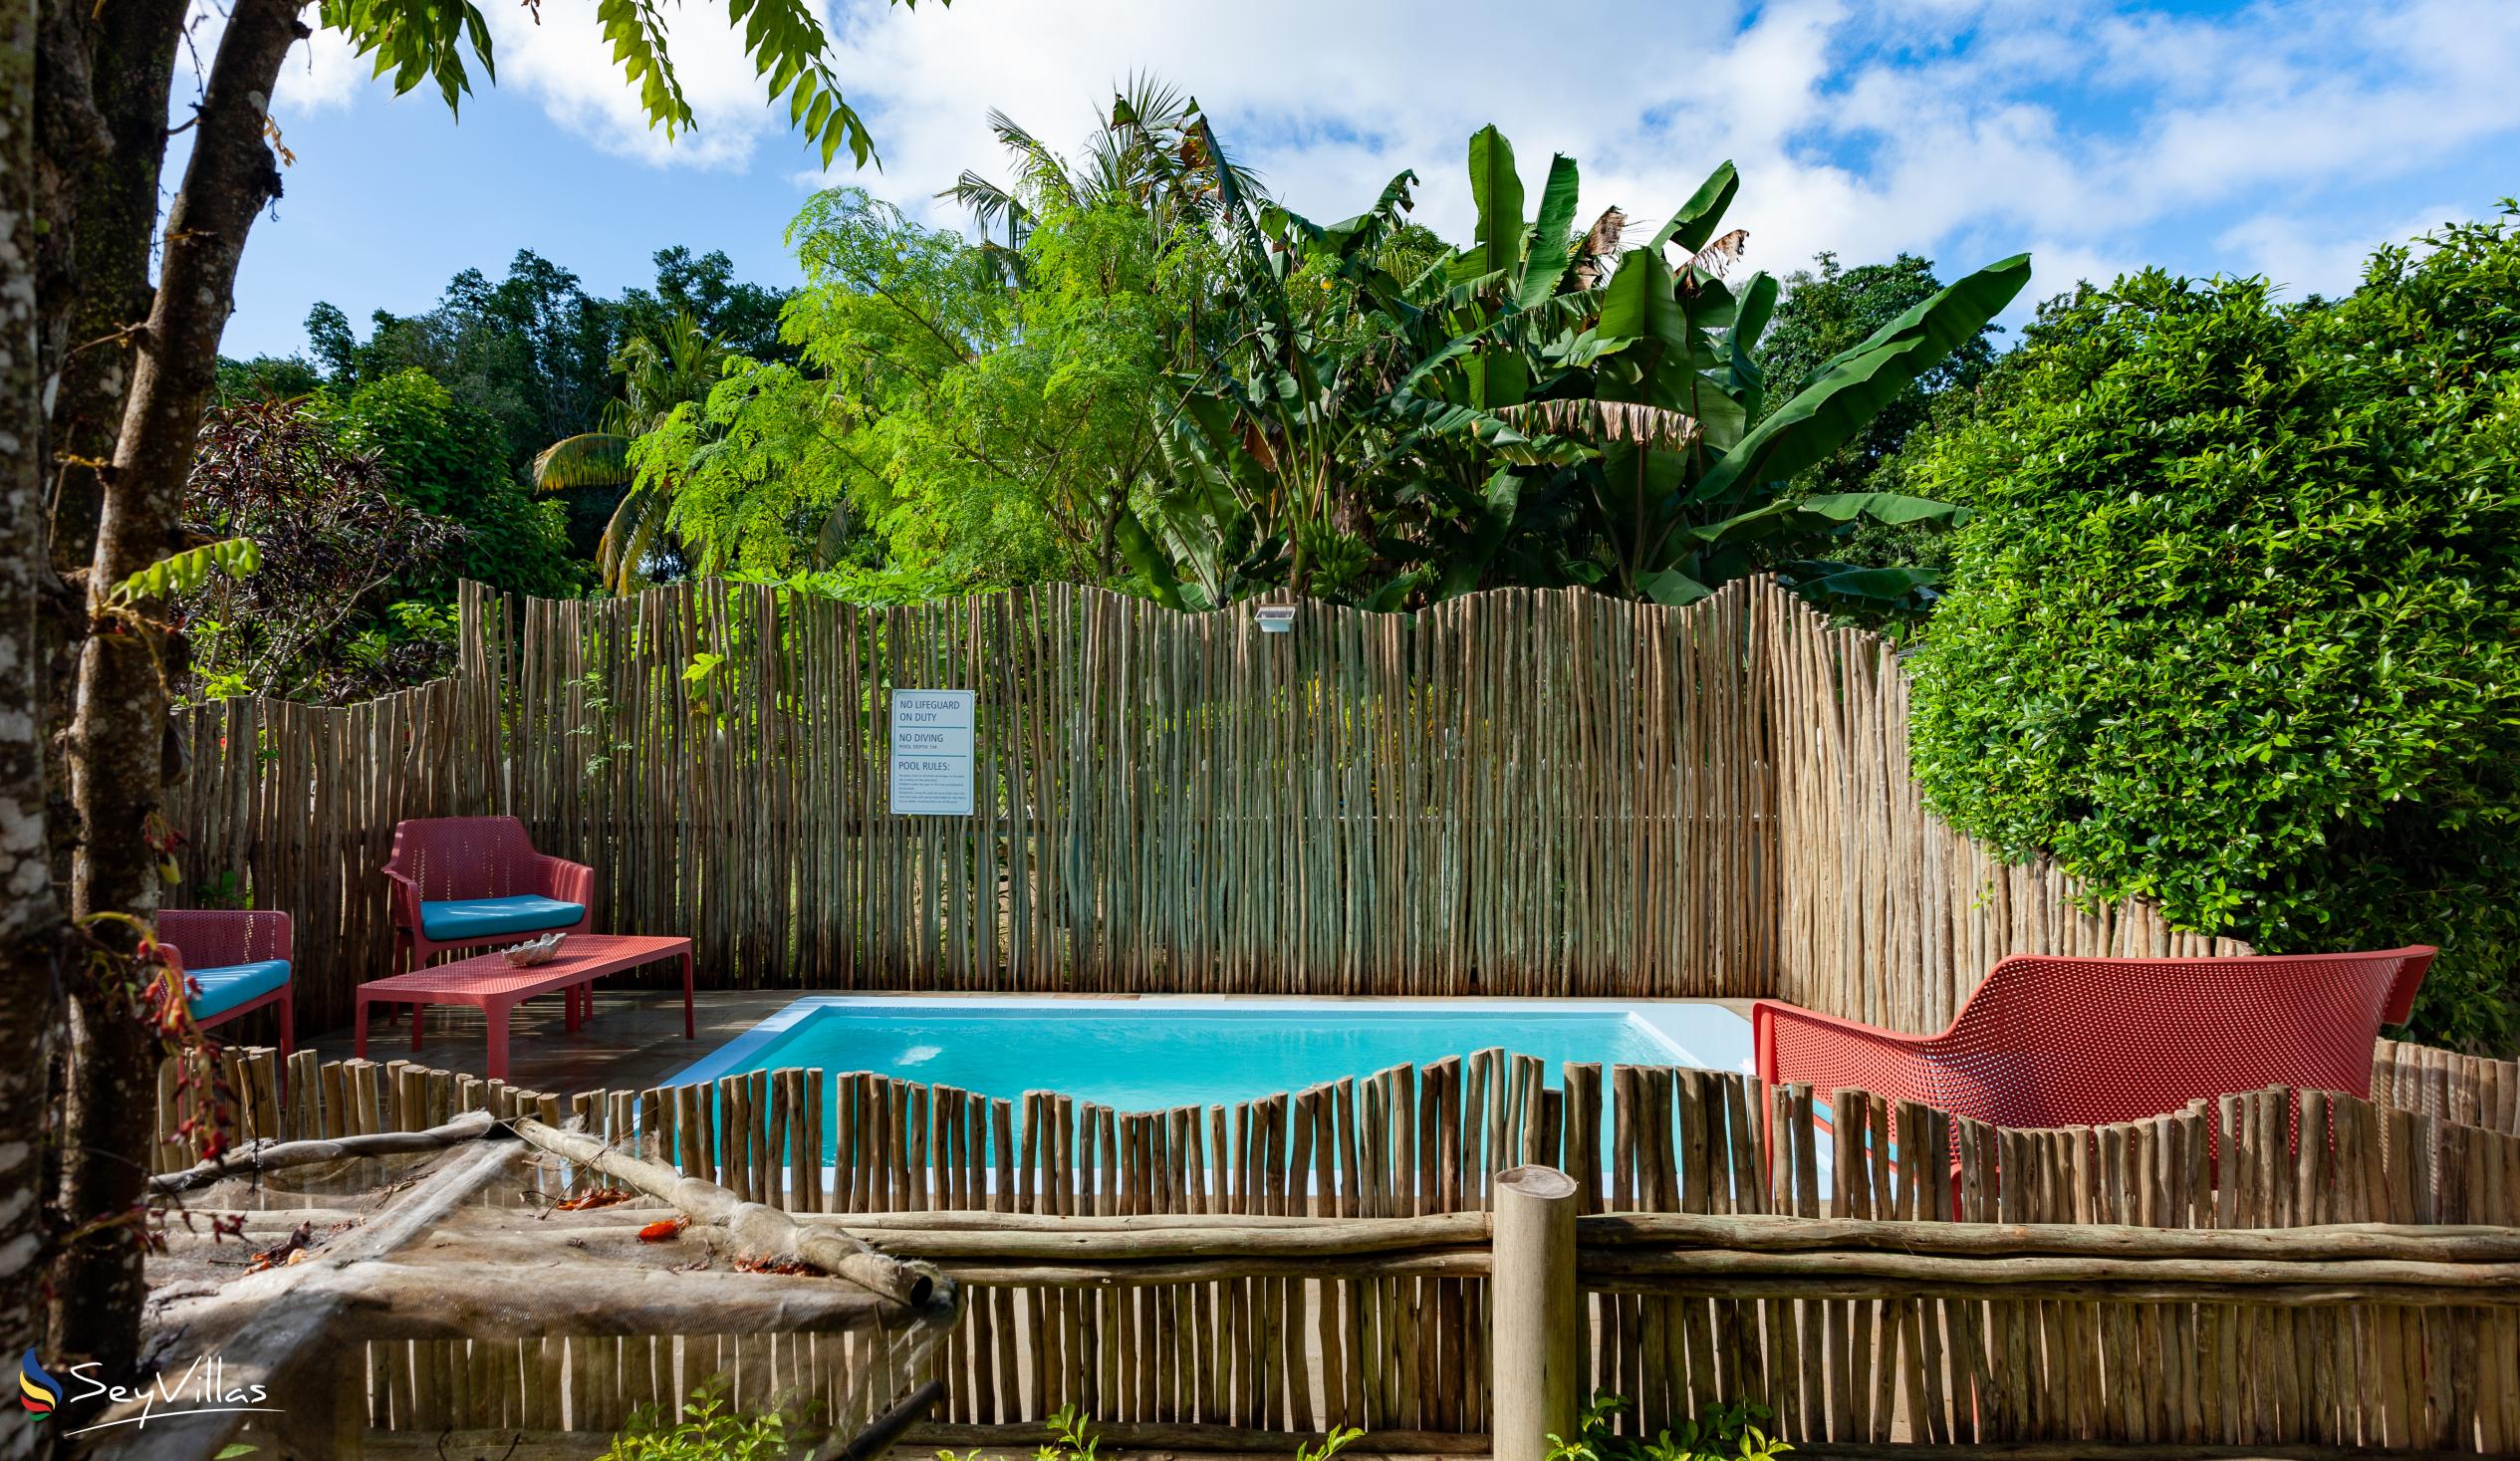 Foto 79: Casa de Leela - Bungalow Luxury con 2 camere e piscina privata - La Digue (Seychelles)